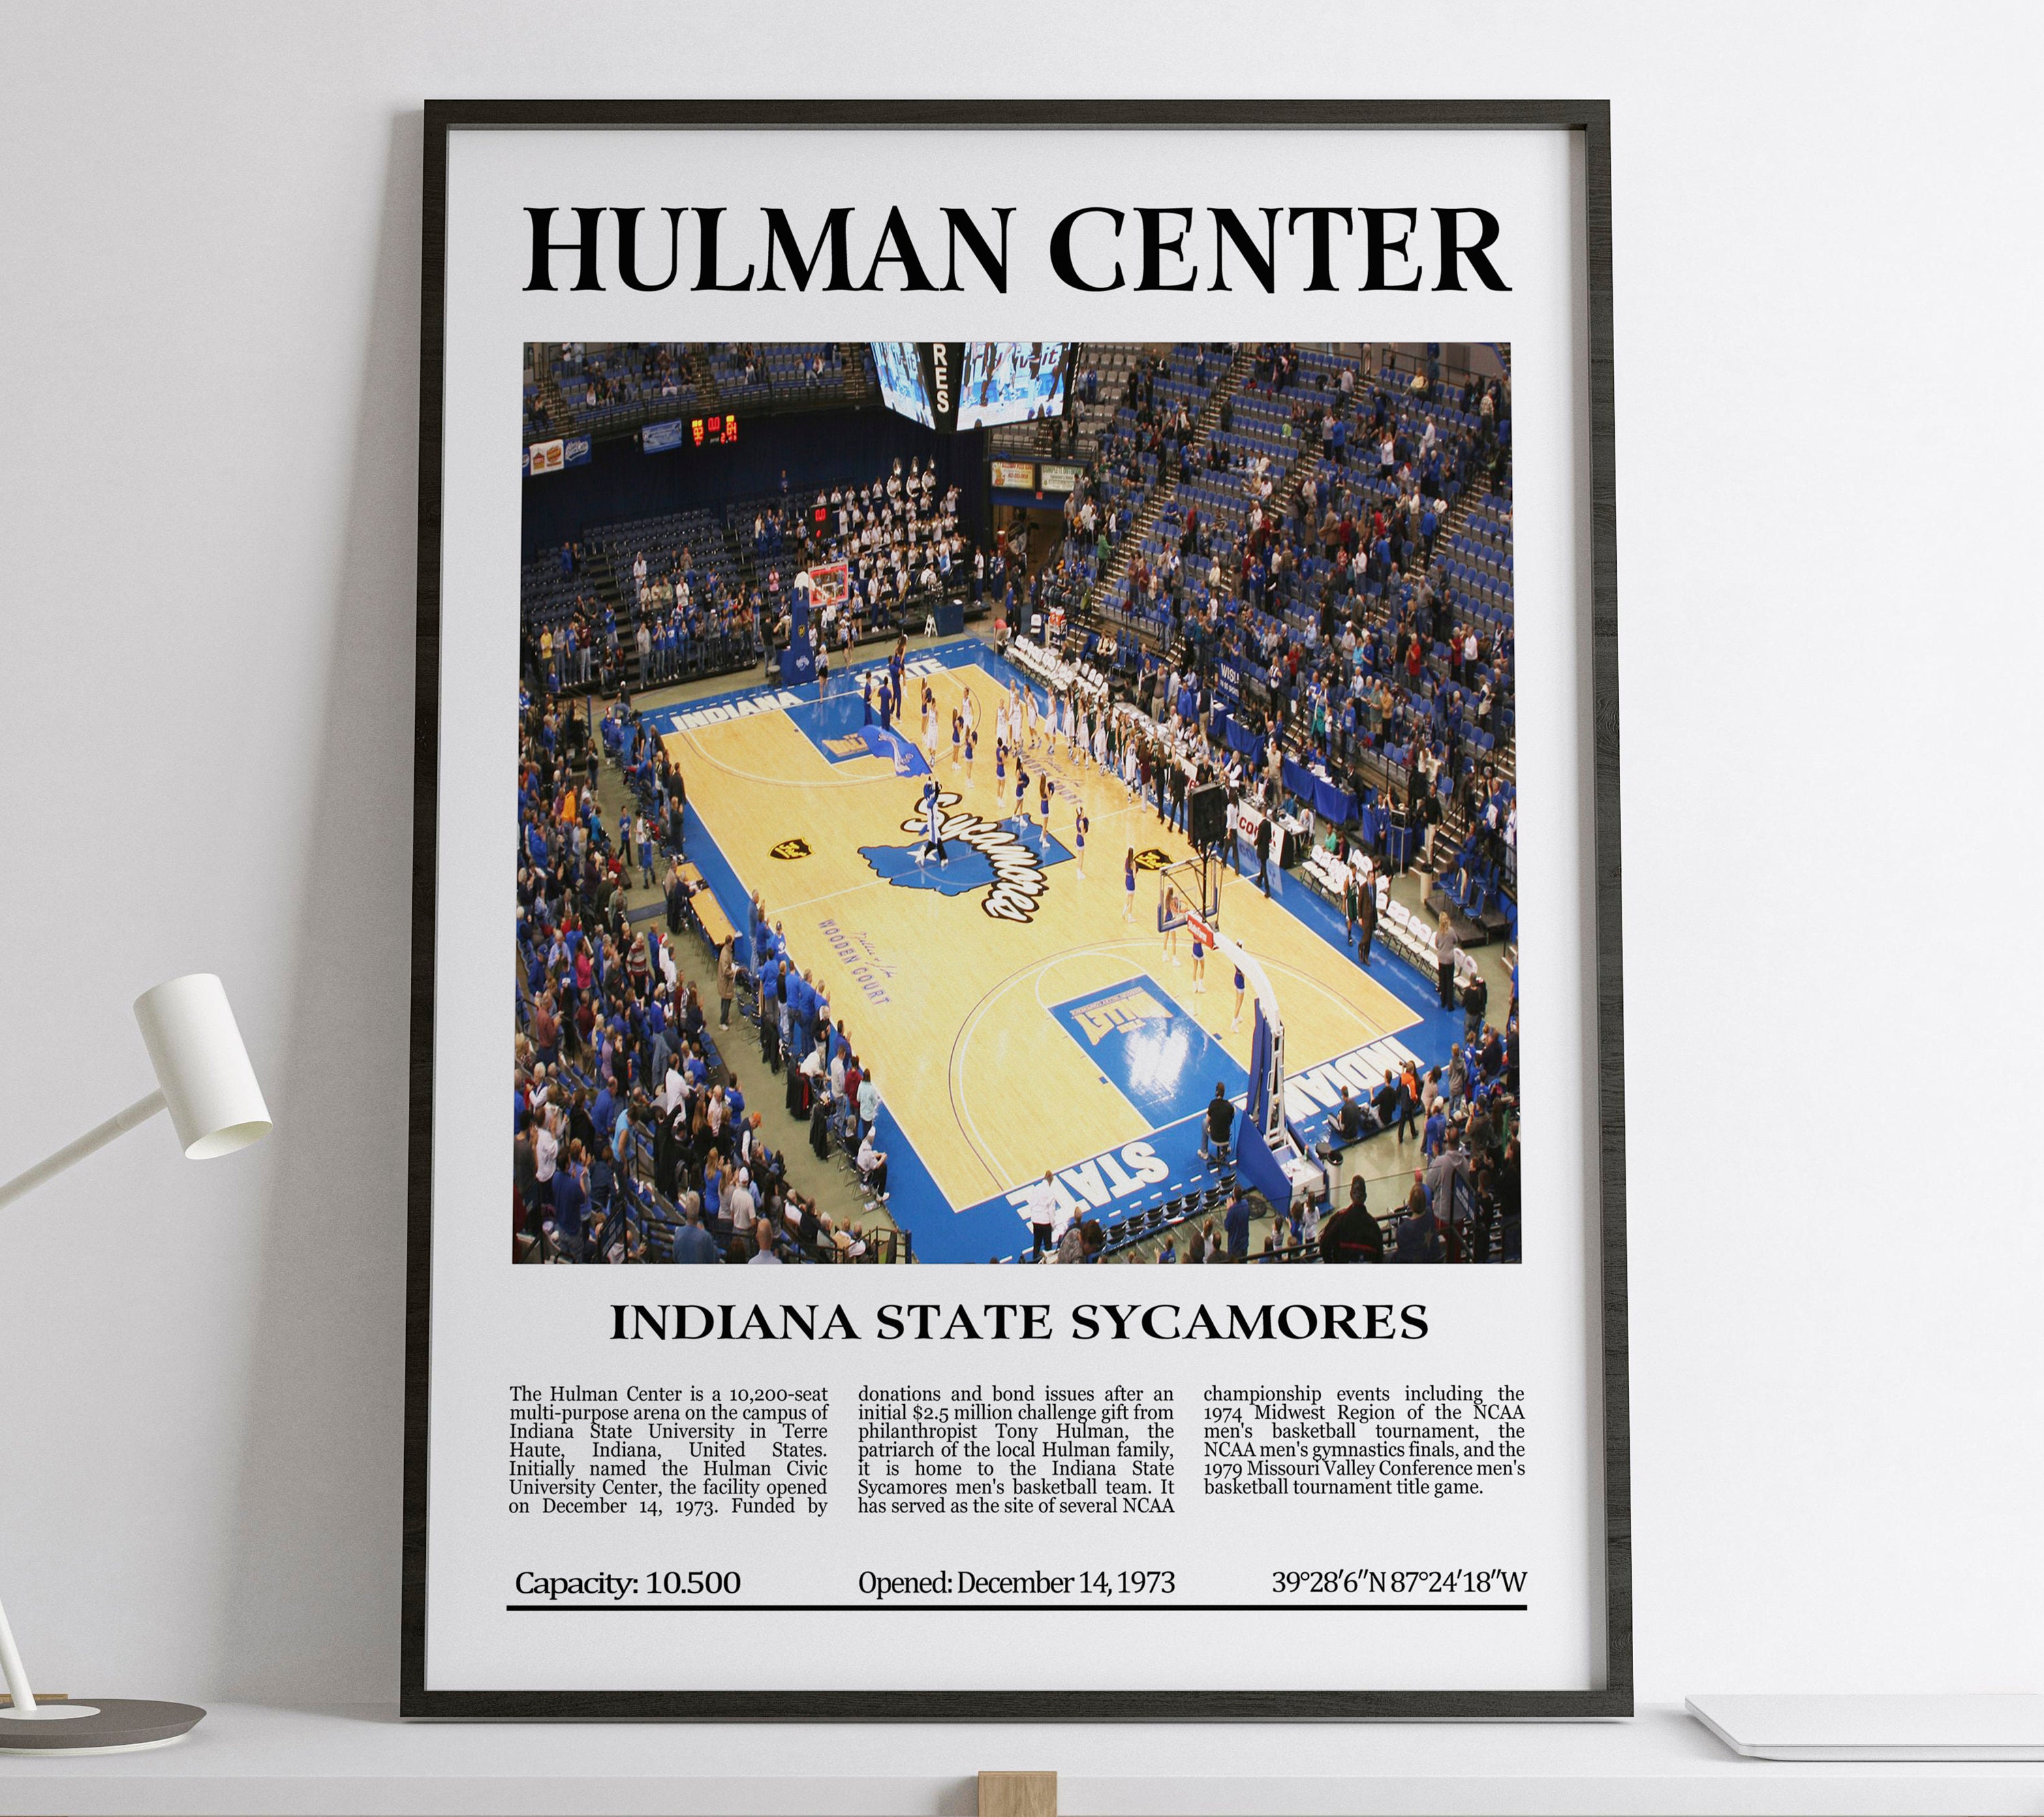 Hulman Center, Indiana State University's Hulman Center hom…